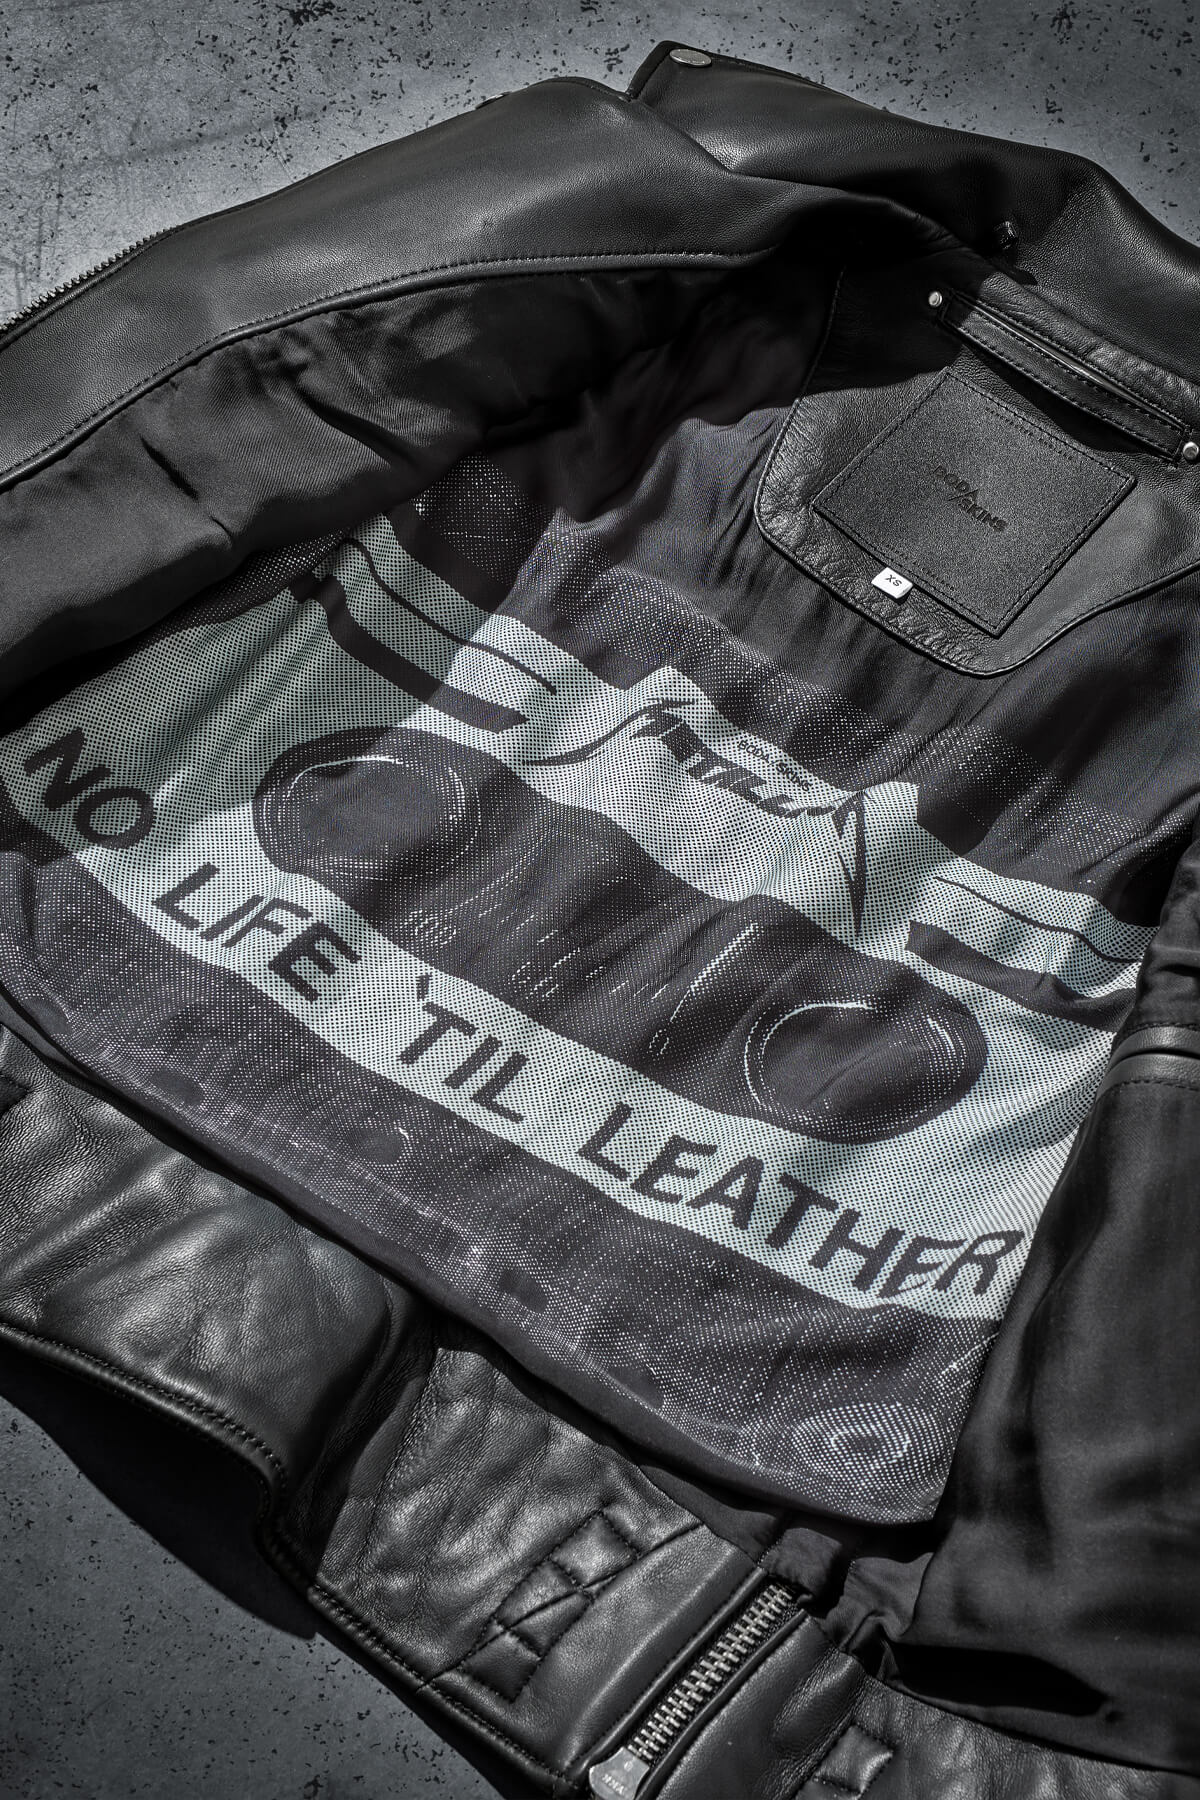 Kay Michaels: No Life 'Til Leather (Woman)